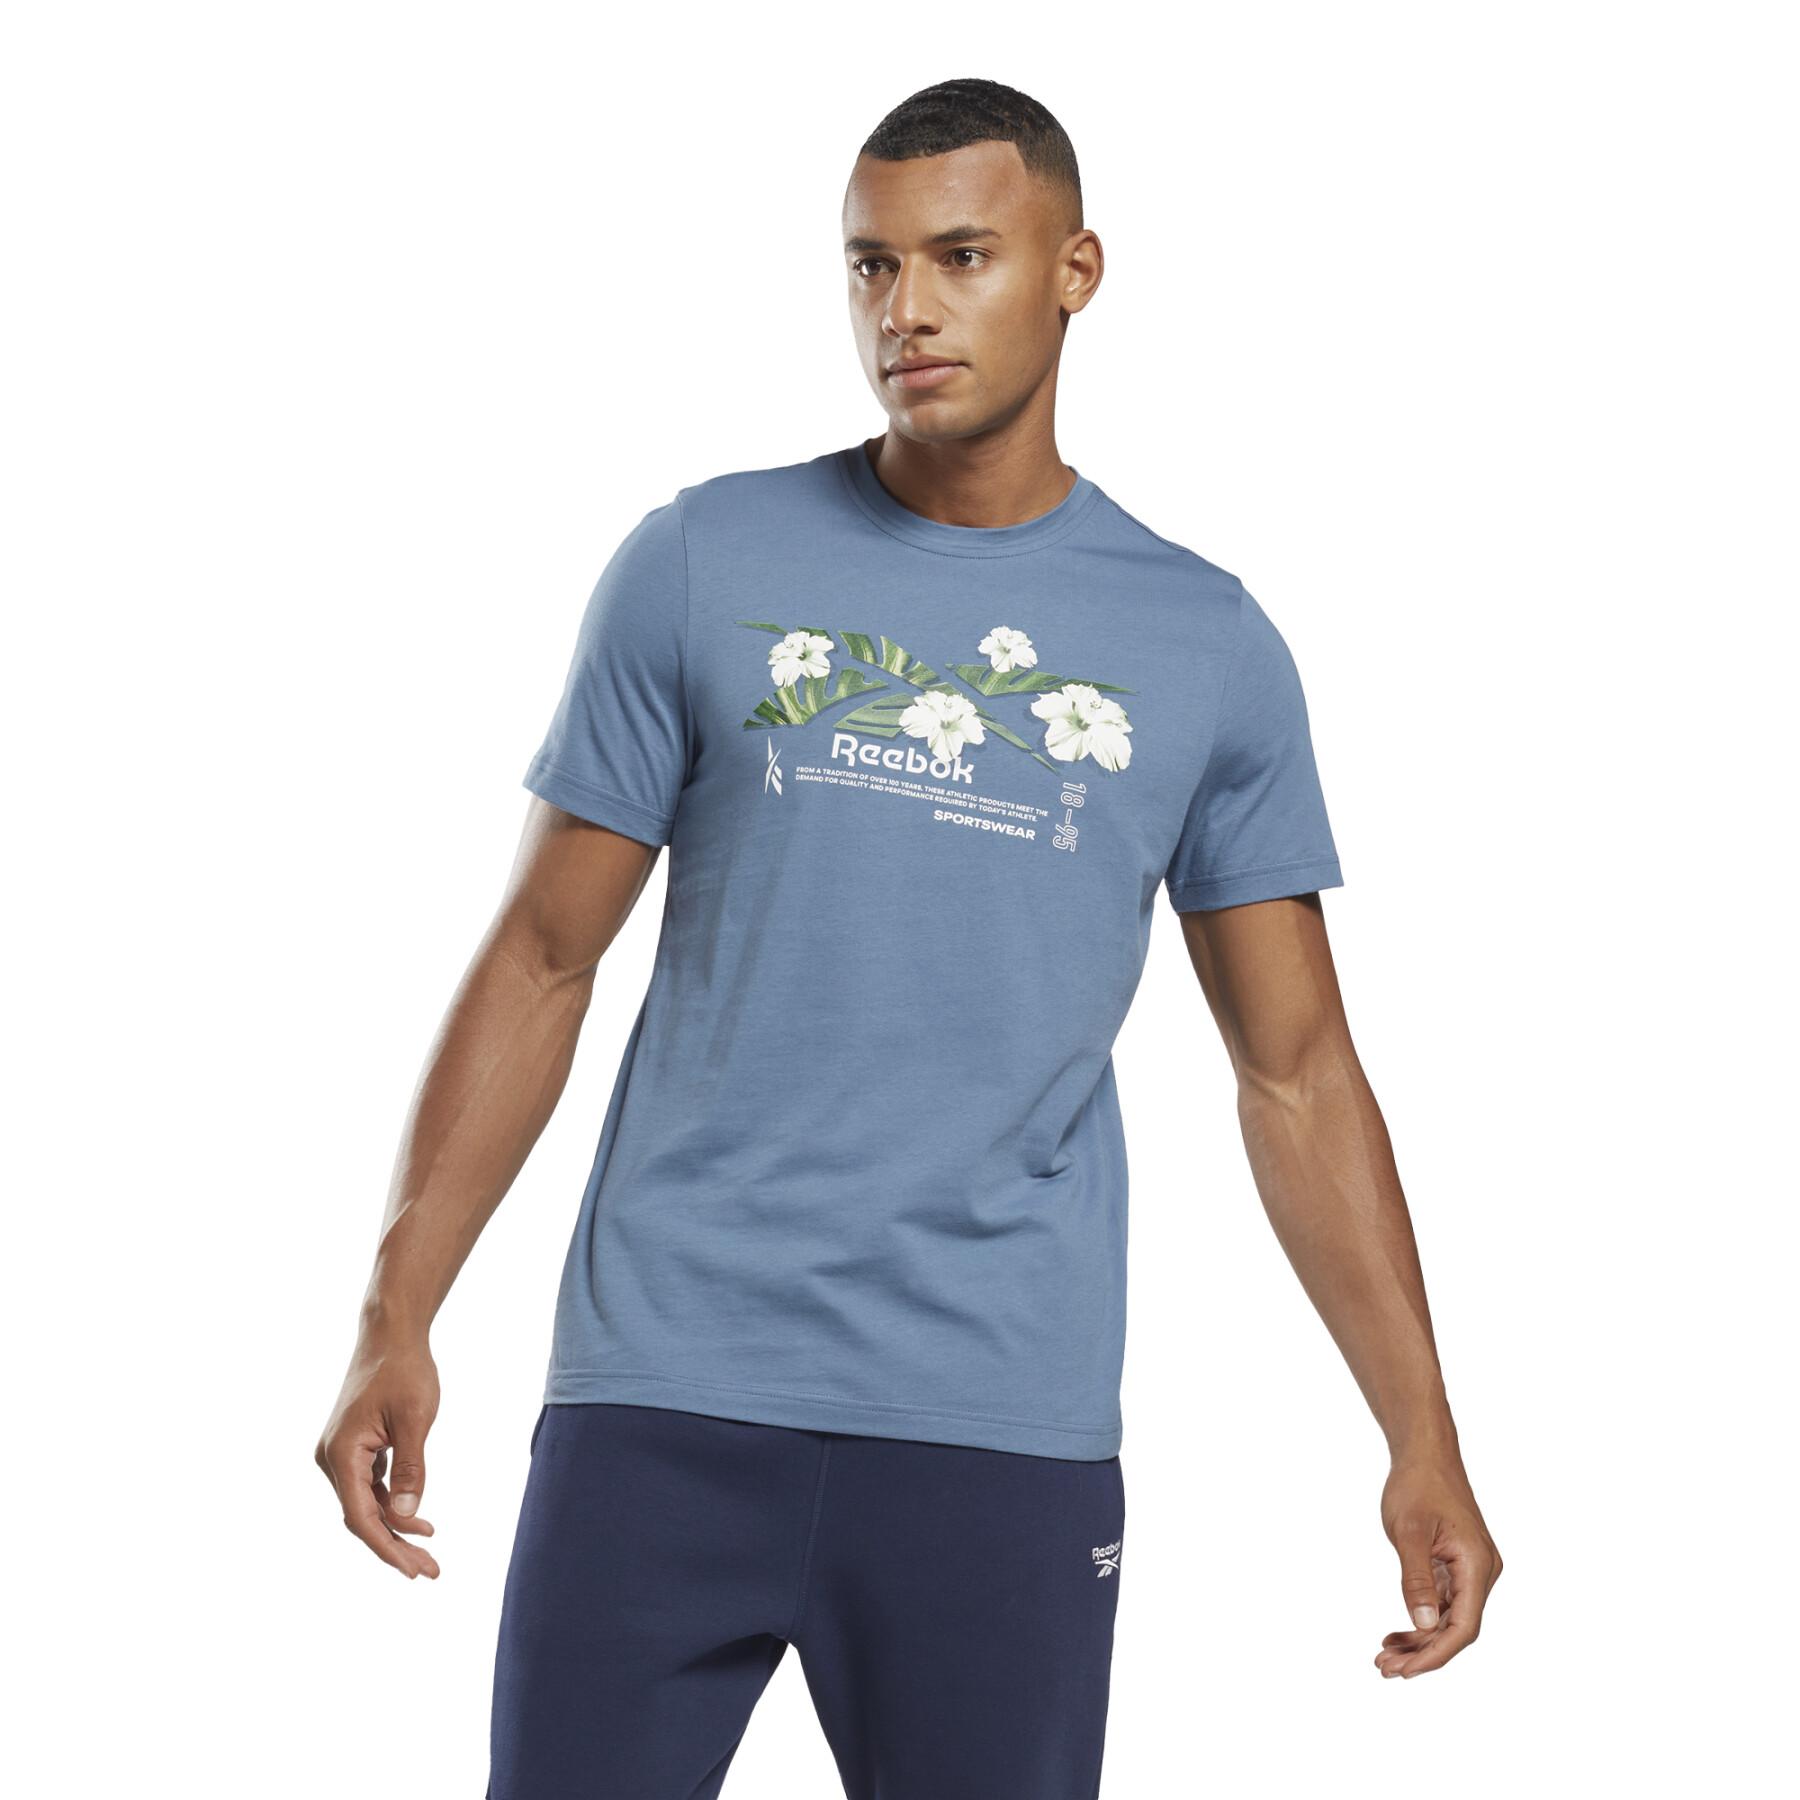 T-Shirt Reebok Graphic Series Vector Flower